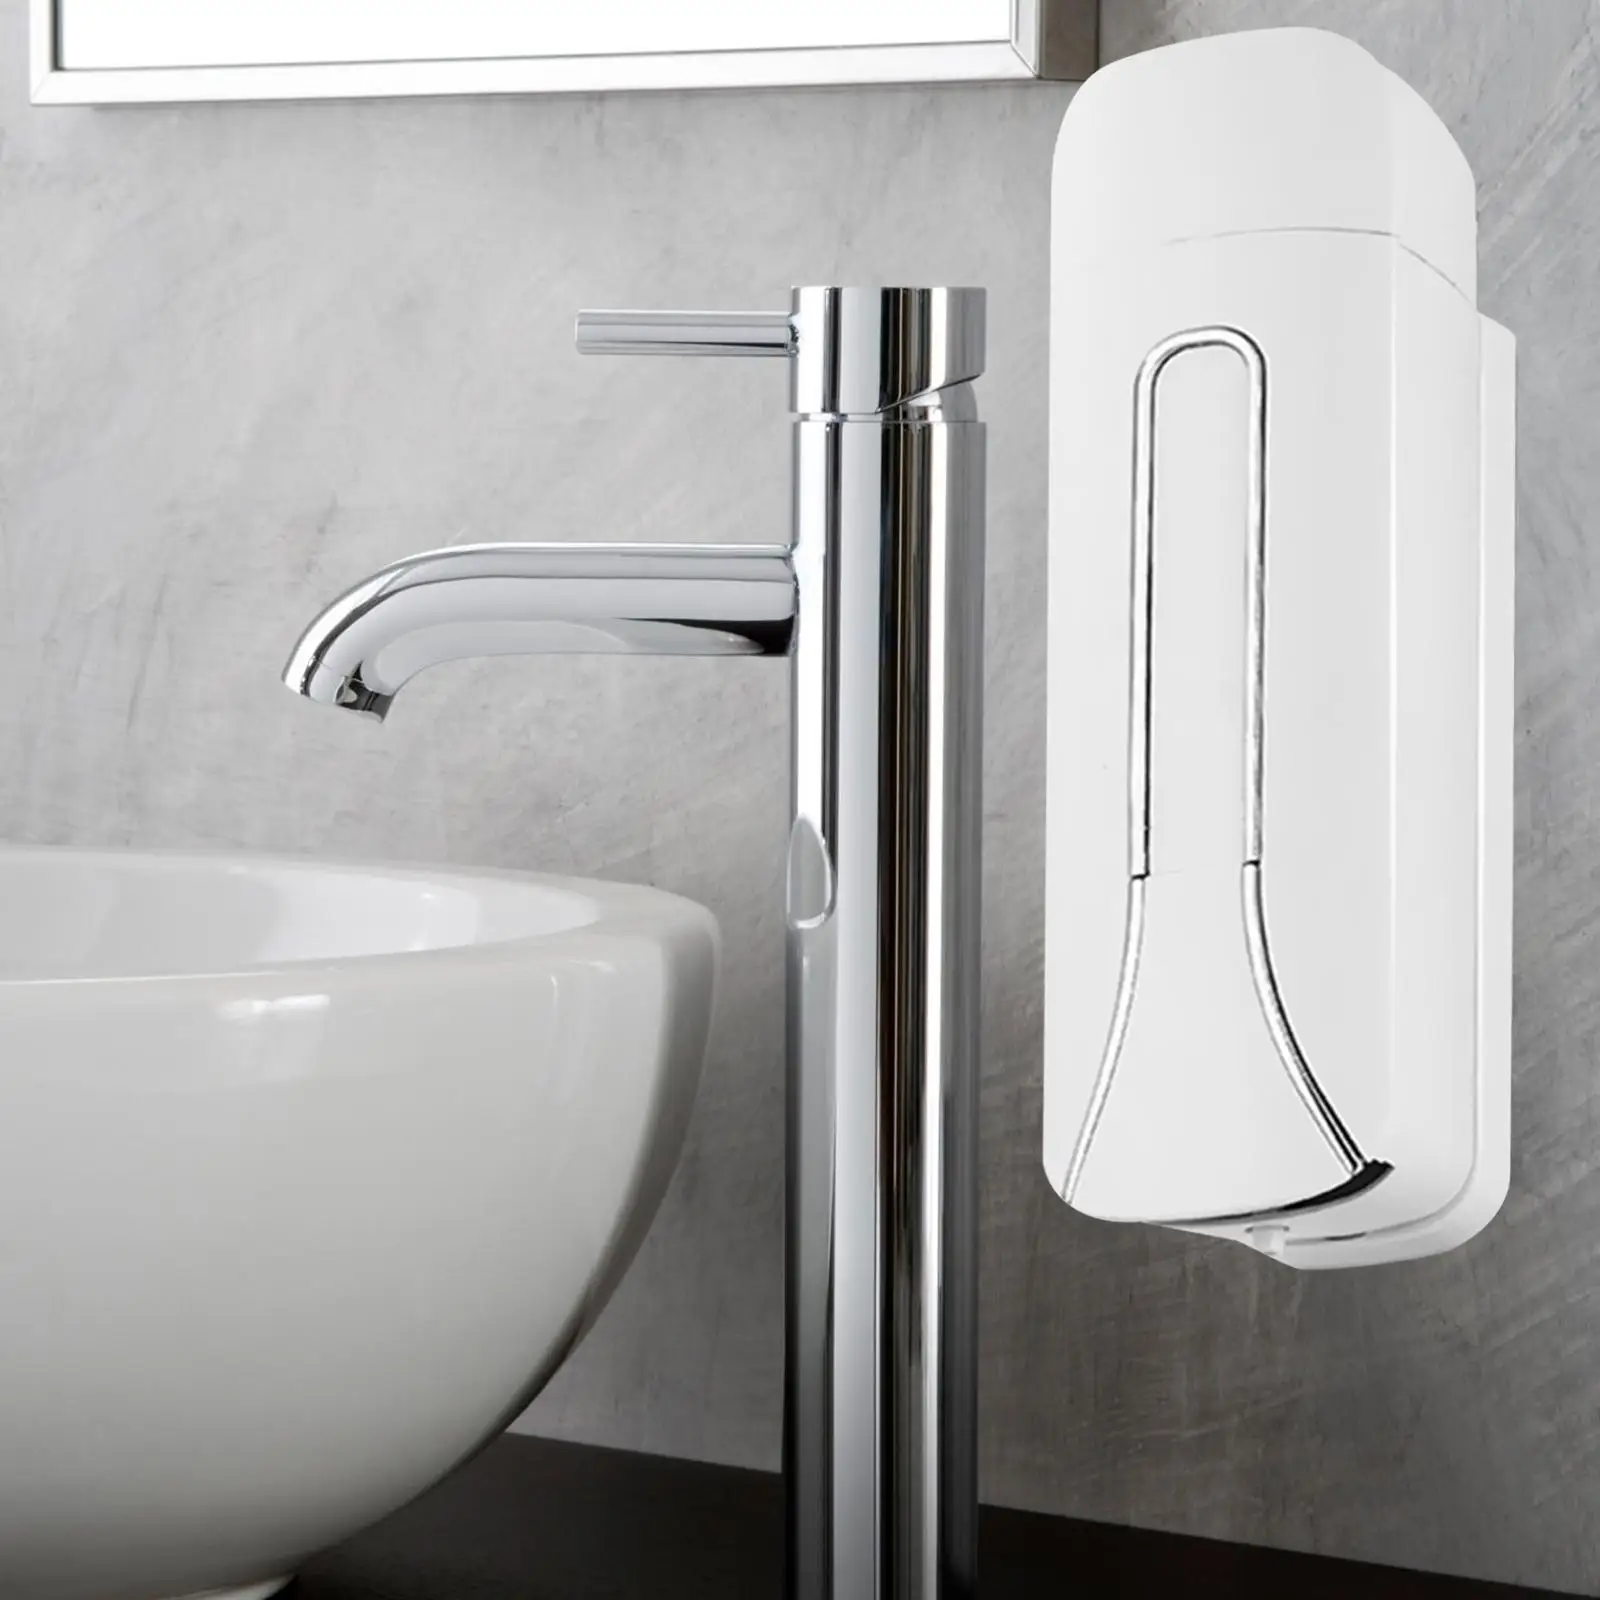 Manual Foam Soap Dispenser Hands Free Soap Dispenser Shower Soap Refillable 400ml Wall Mounted for School Office Hotel Toilet